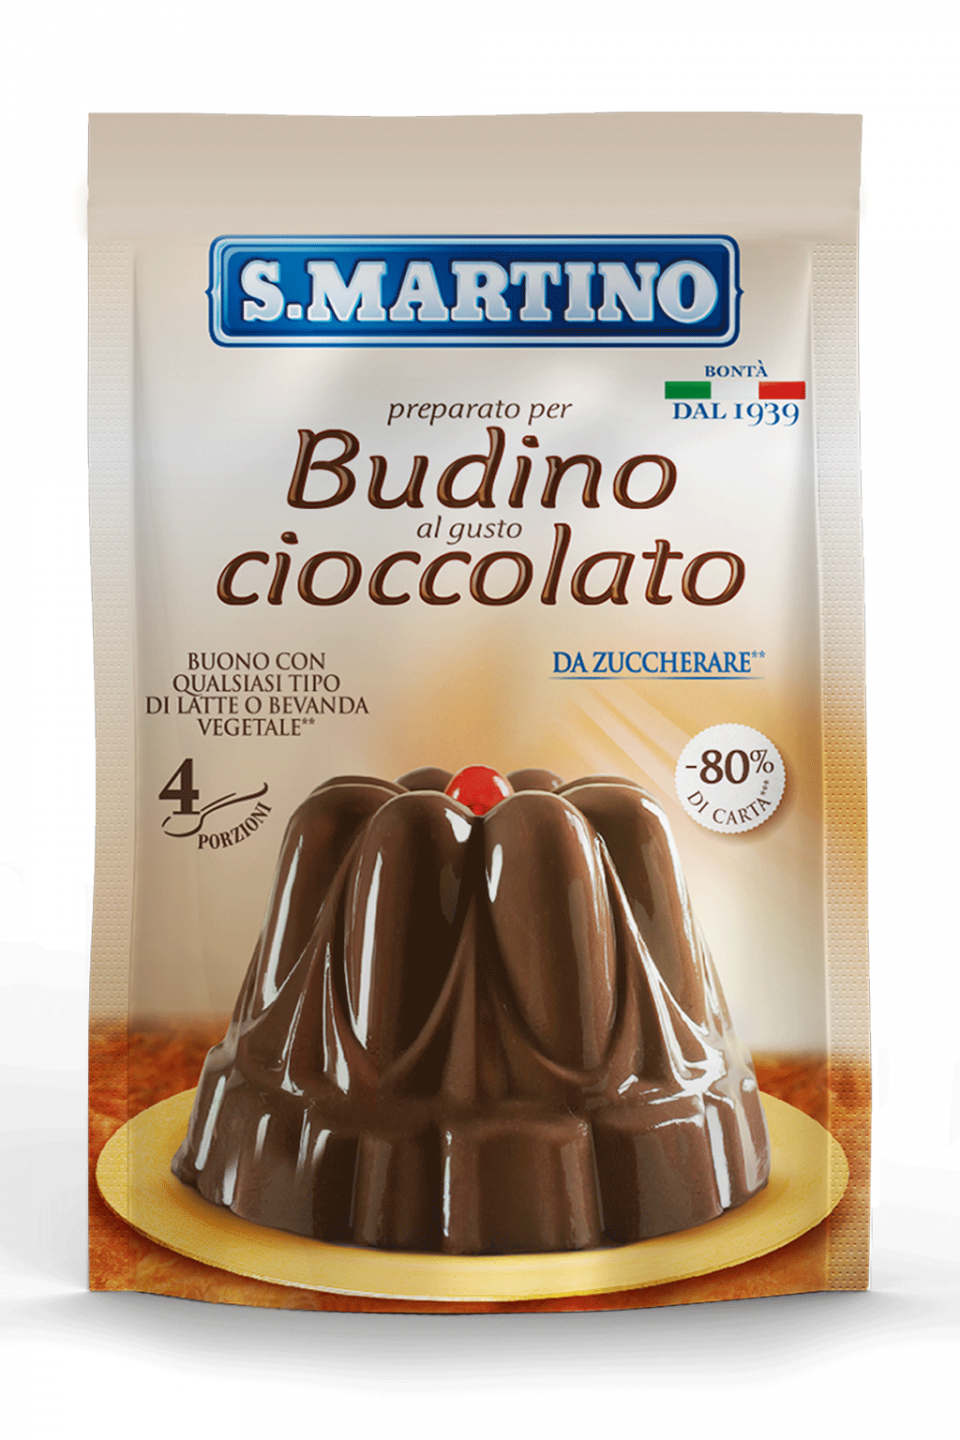 S.MARTINO Budino Cioccolato busta 48g